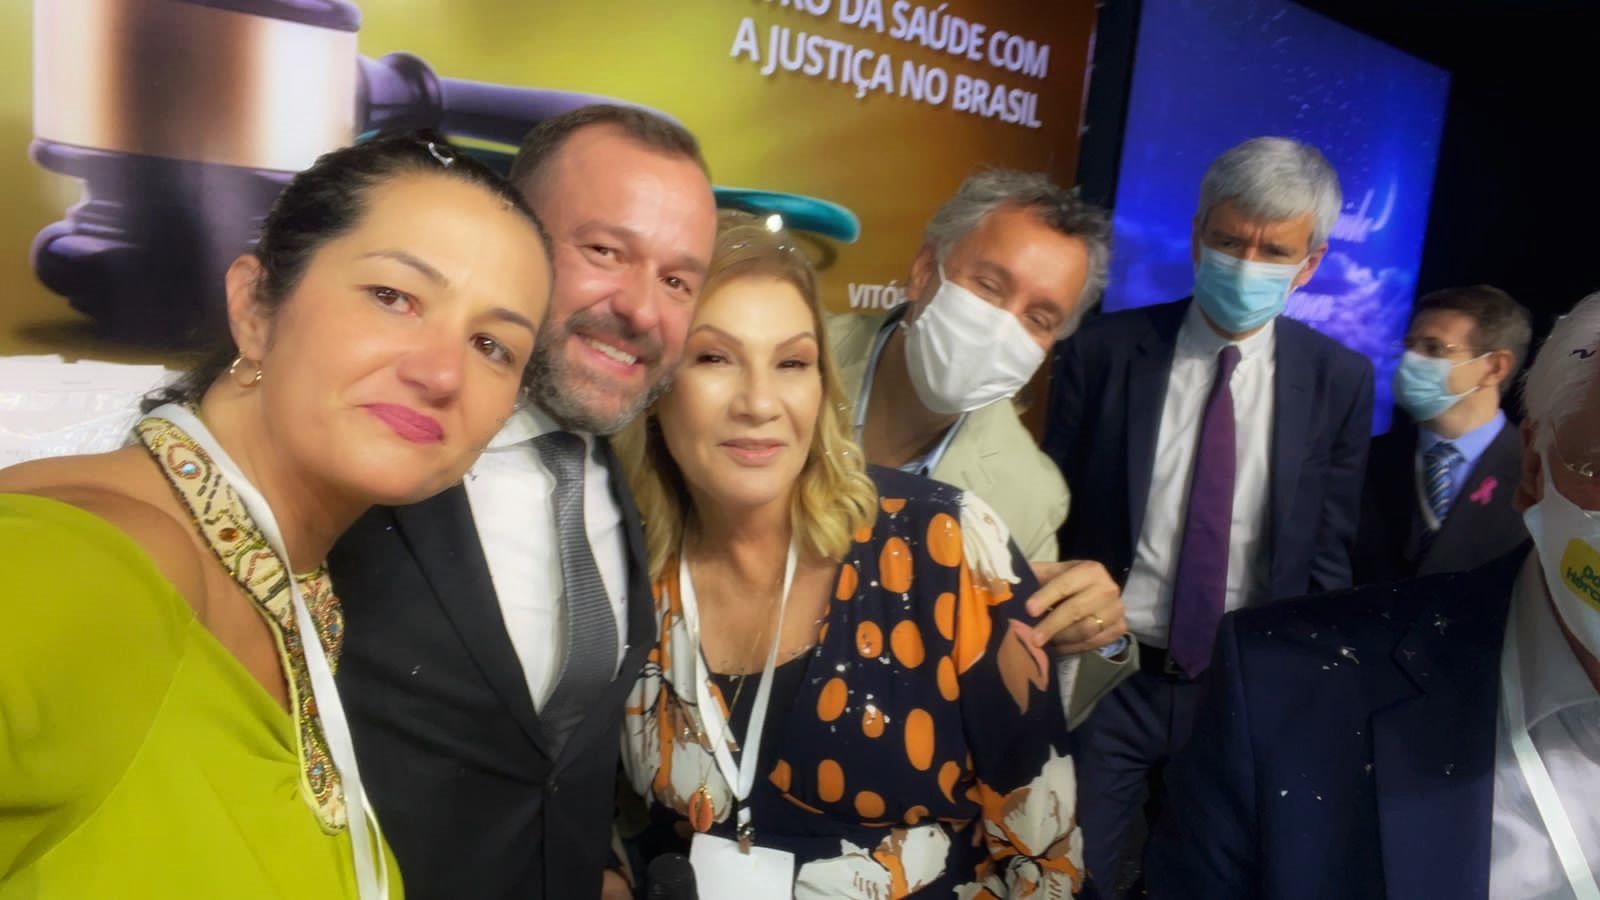 8 congresso brasileiro medico juridico da saude 3